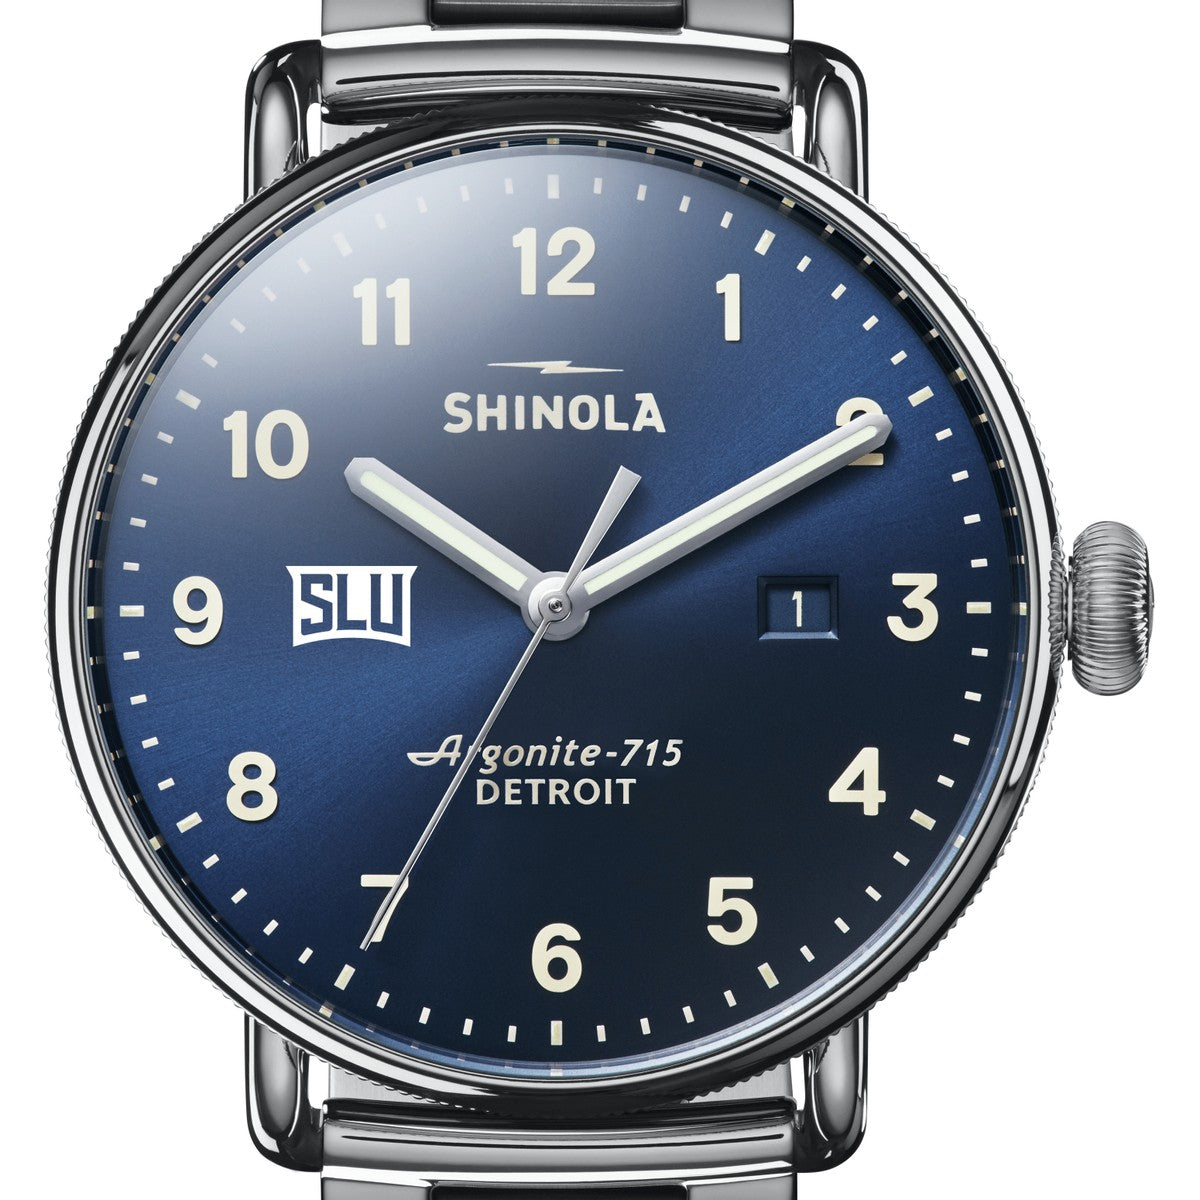 Shinola Monster GMT Watch | Uncrate Supply